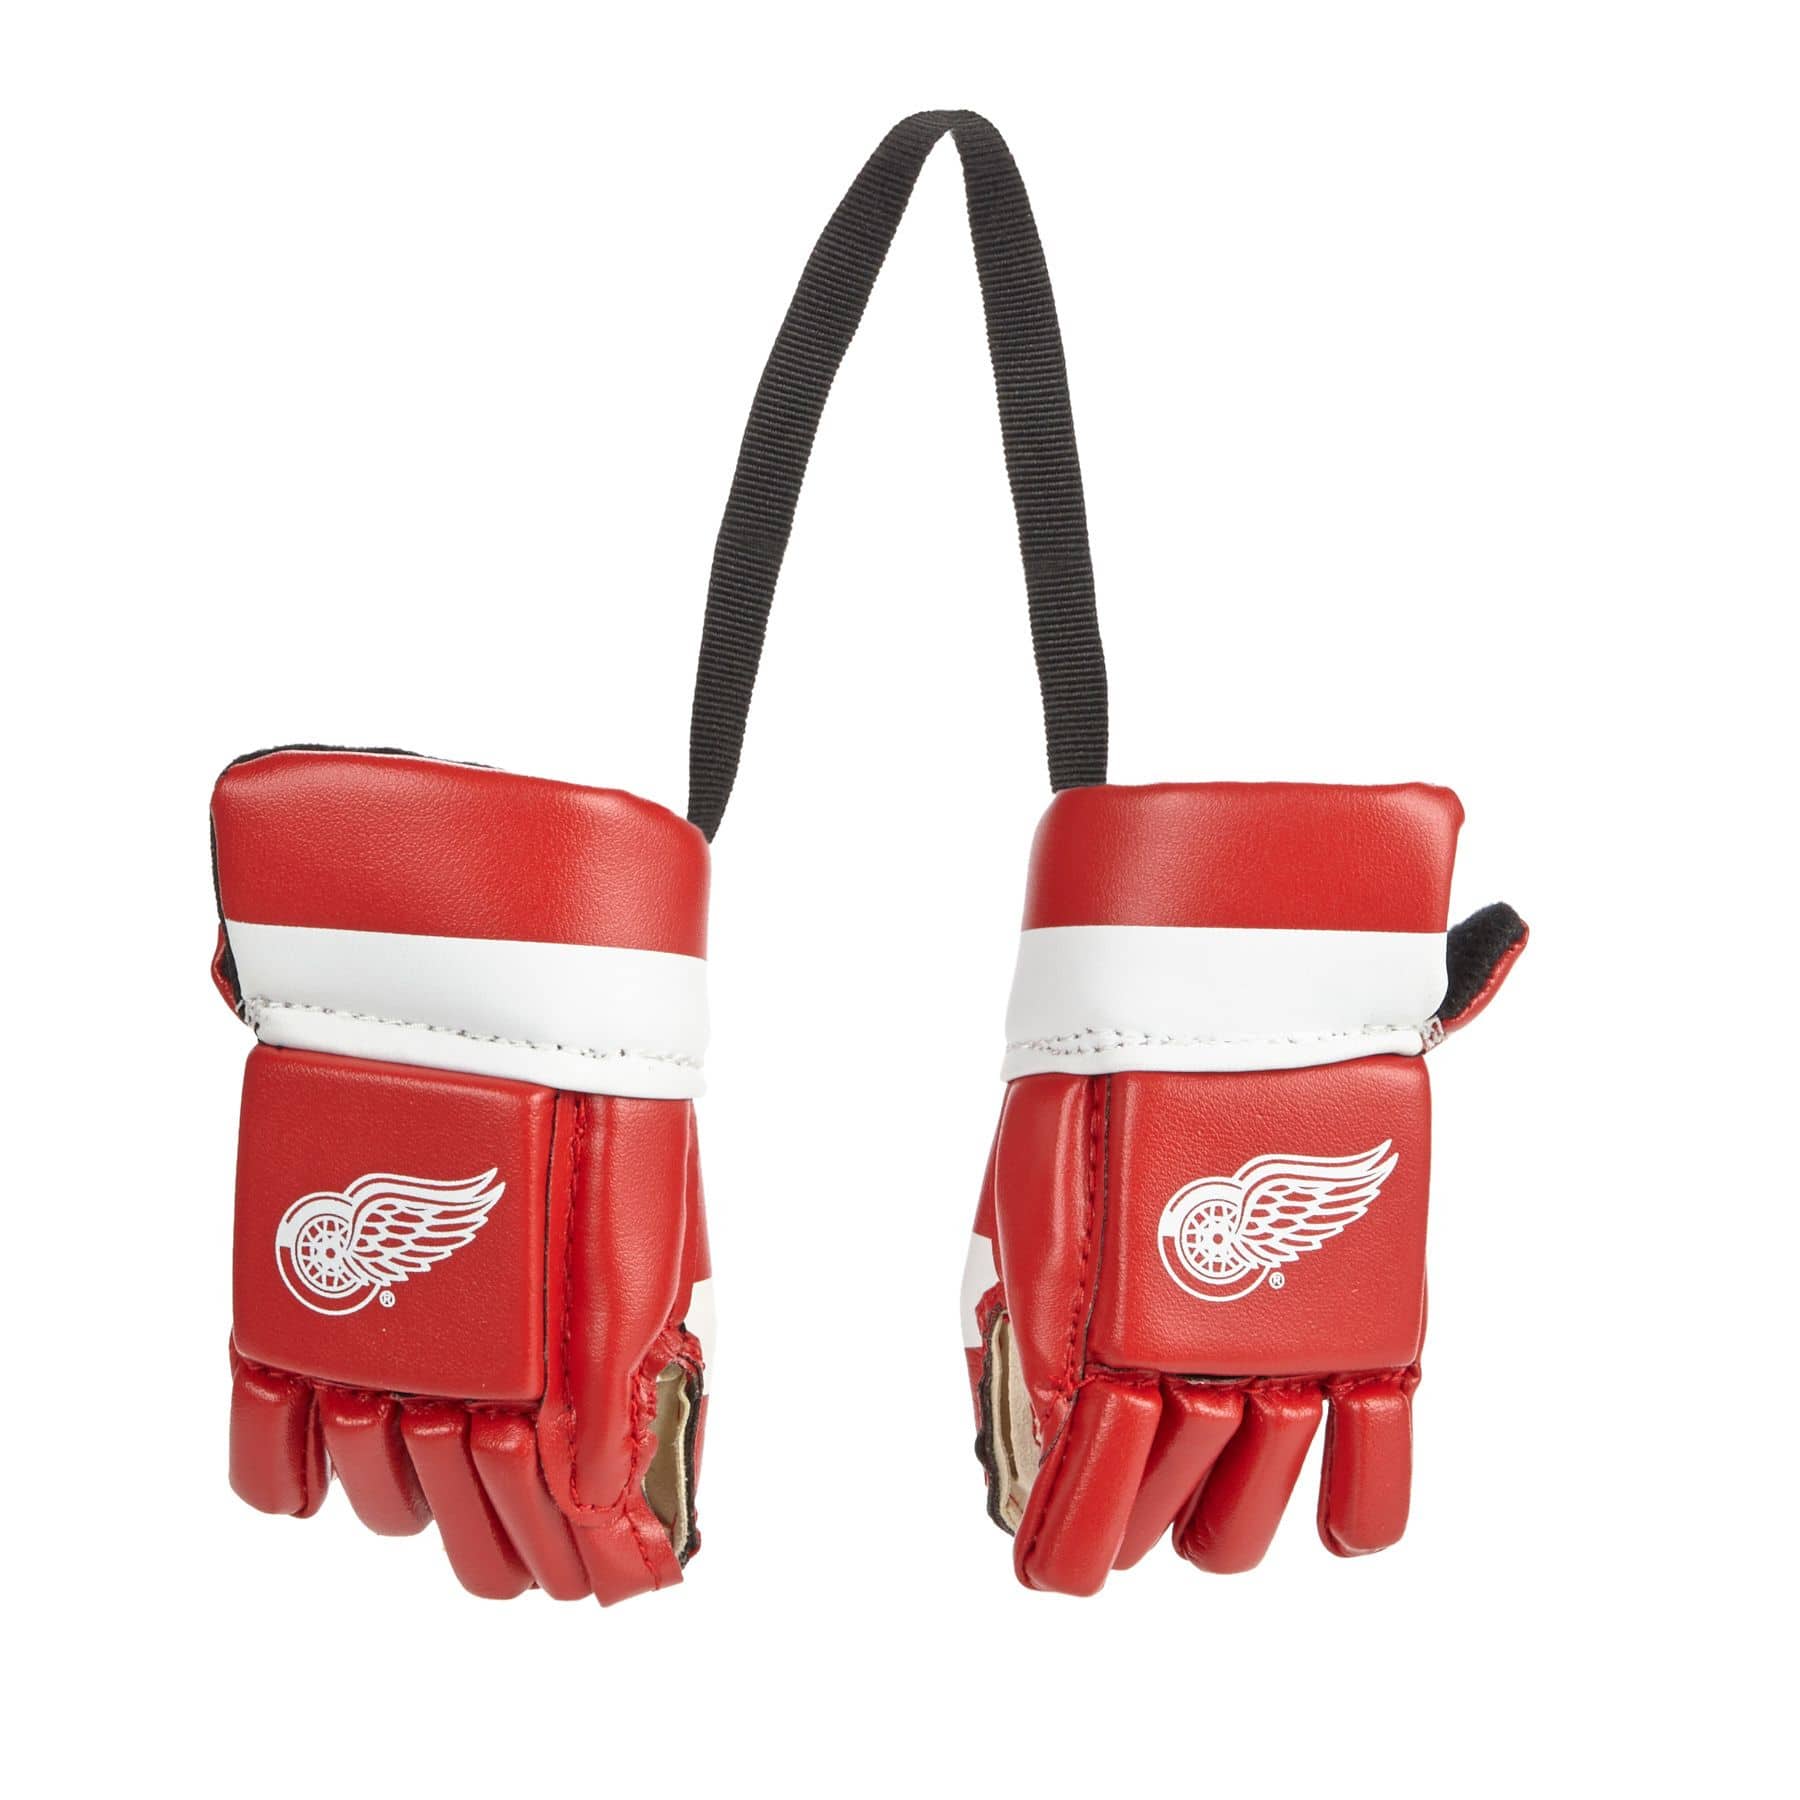 Detroit Red Wings Goalie Mask Battery Op Clock